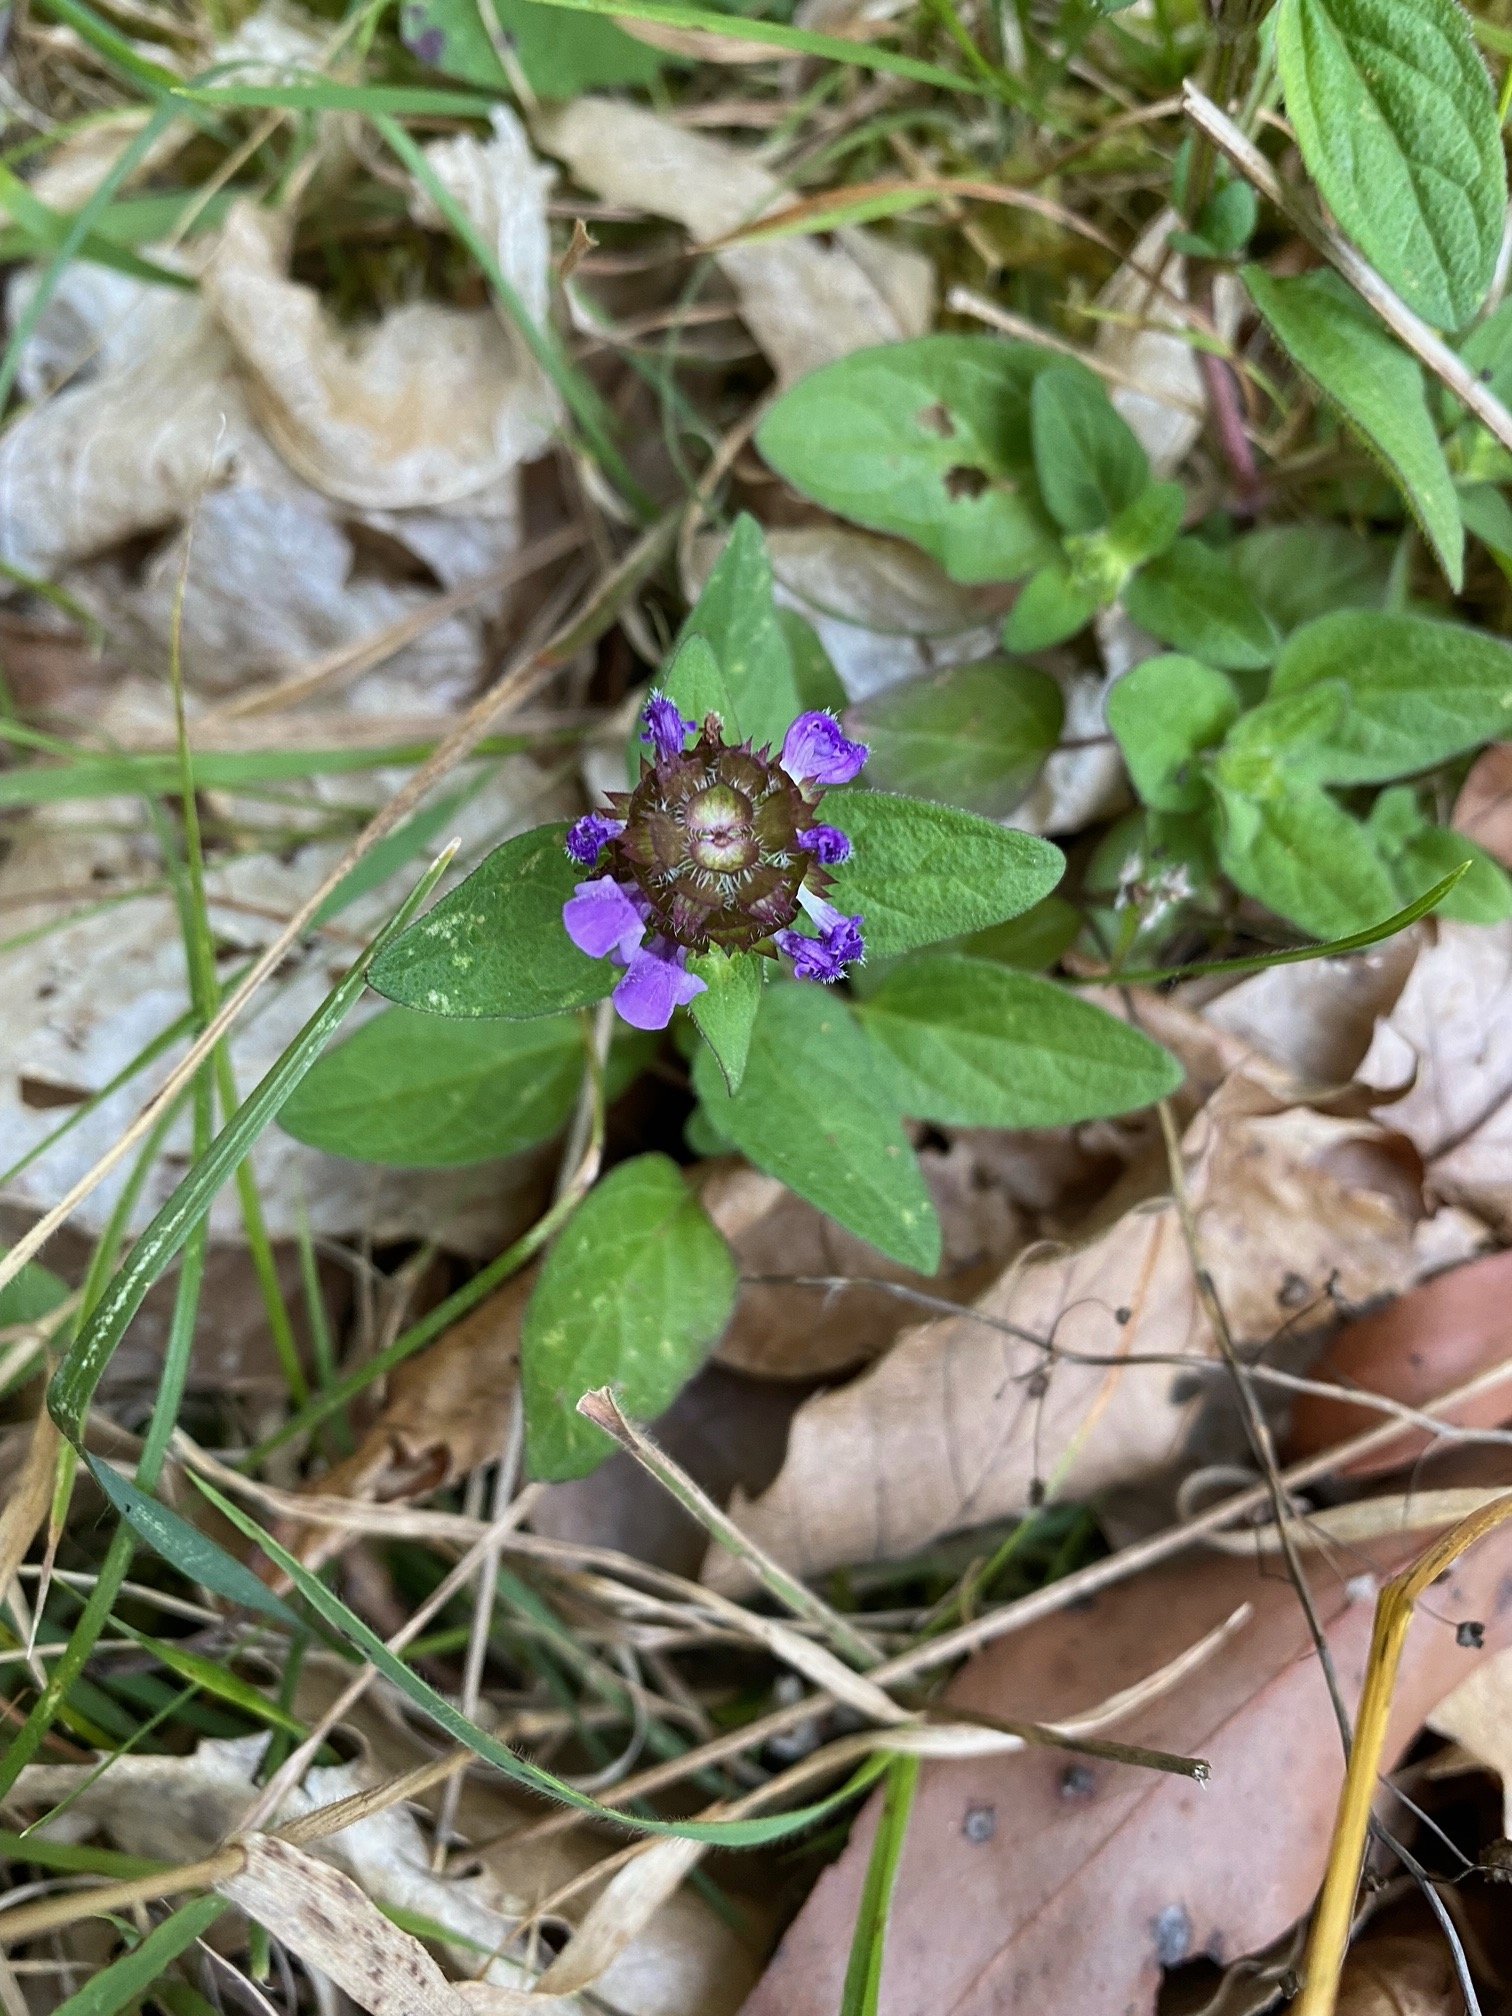 Small wet purple flower on green leaves